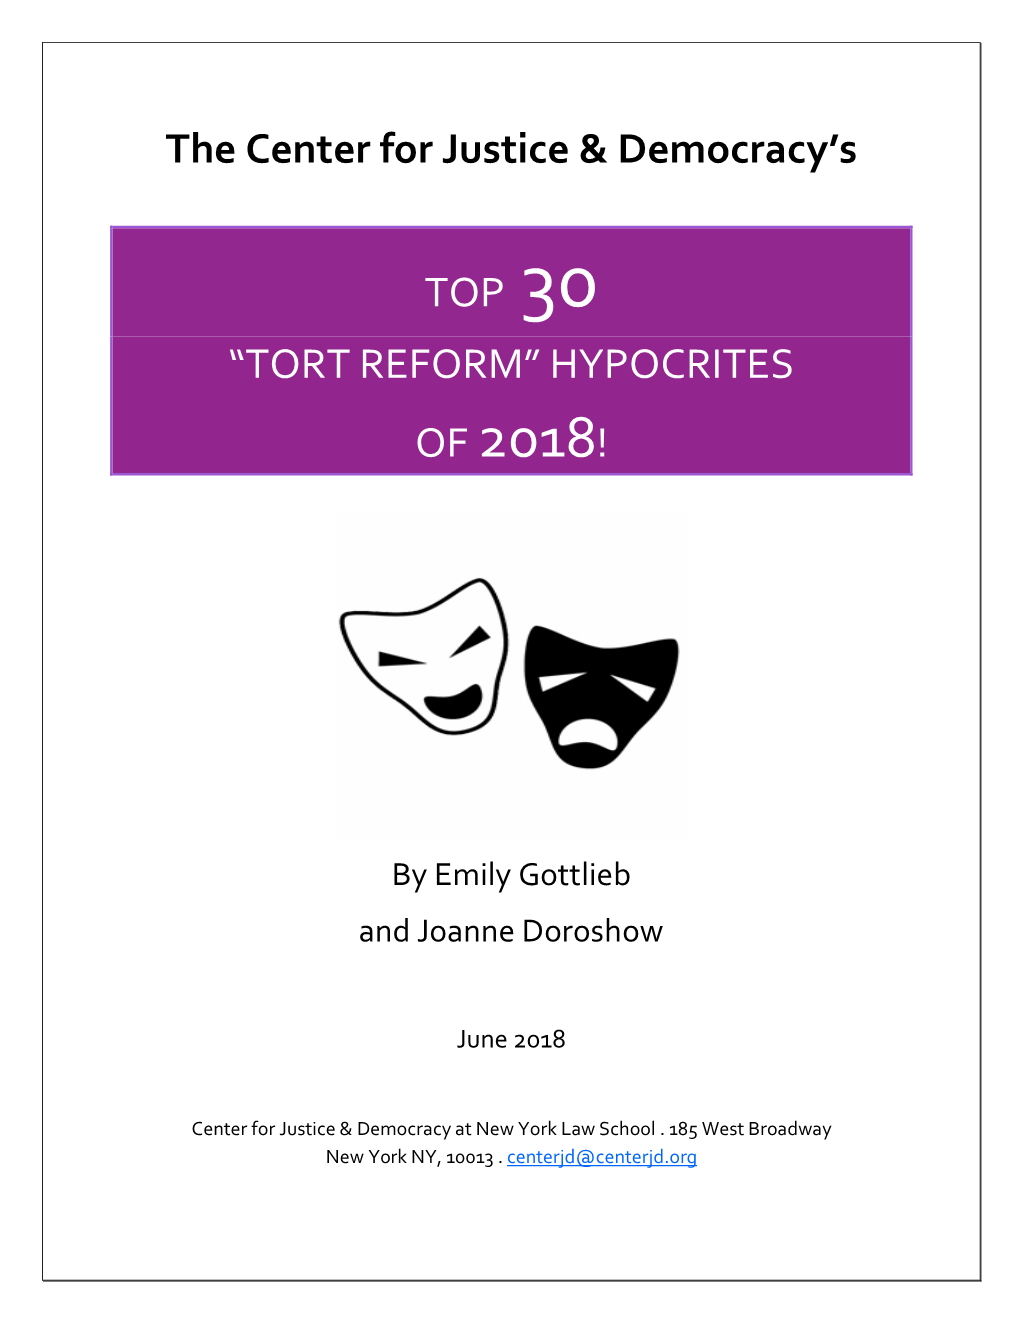 Top 30 “Tort Reform” Hypocrites of 2018!